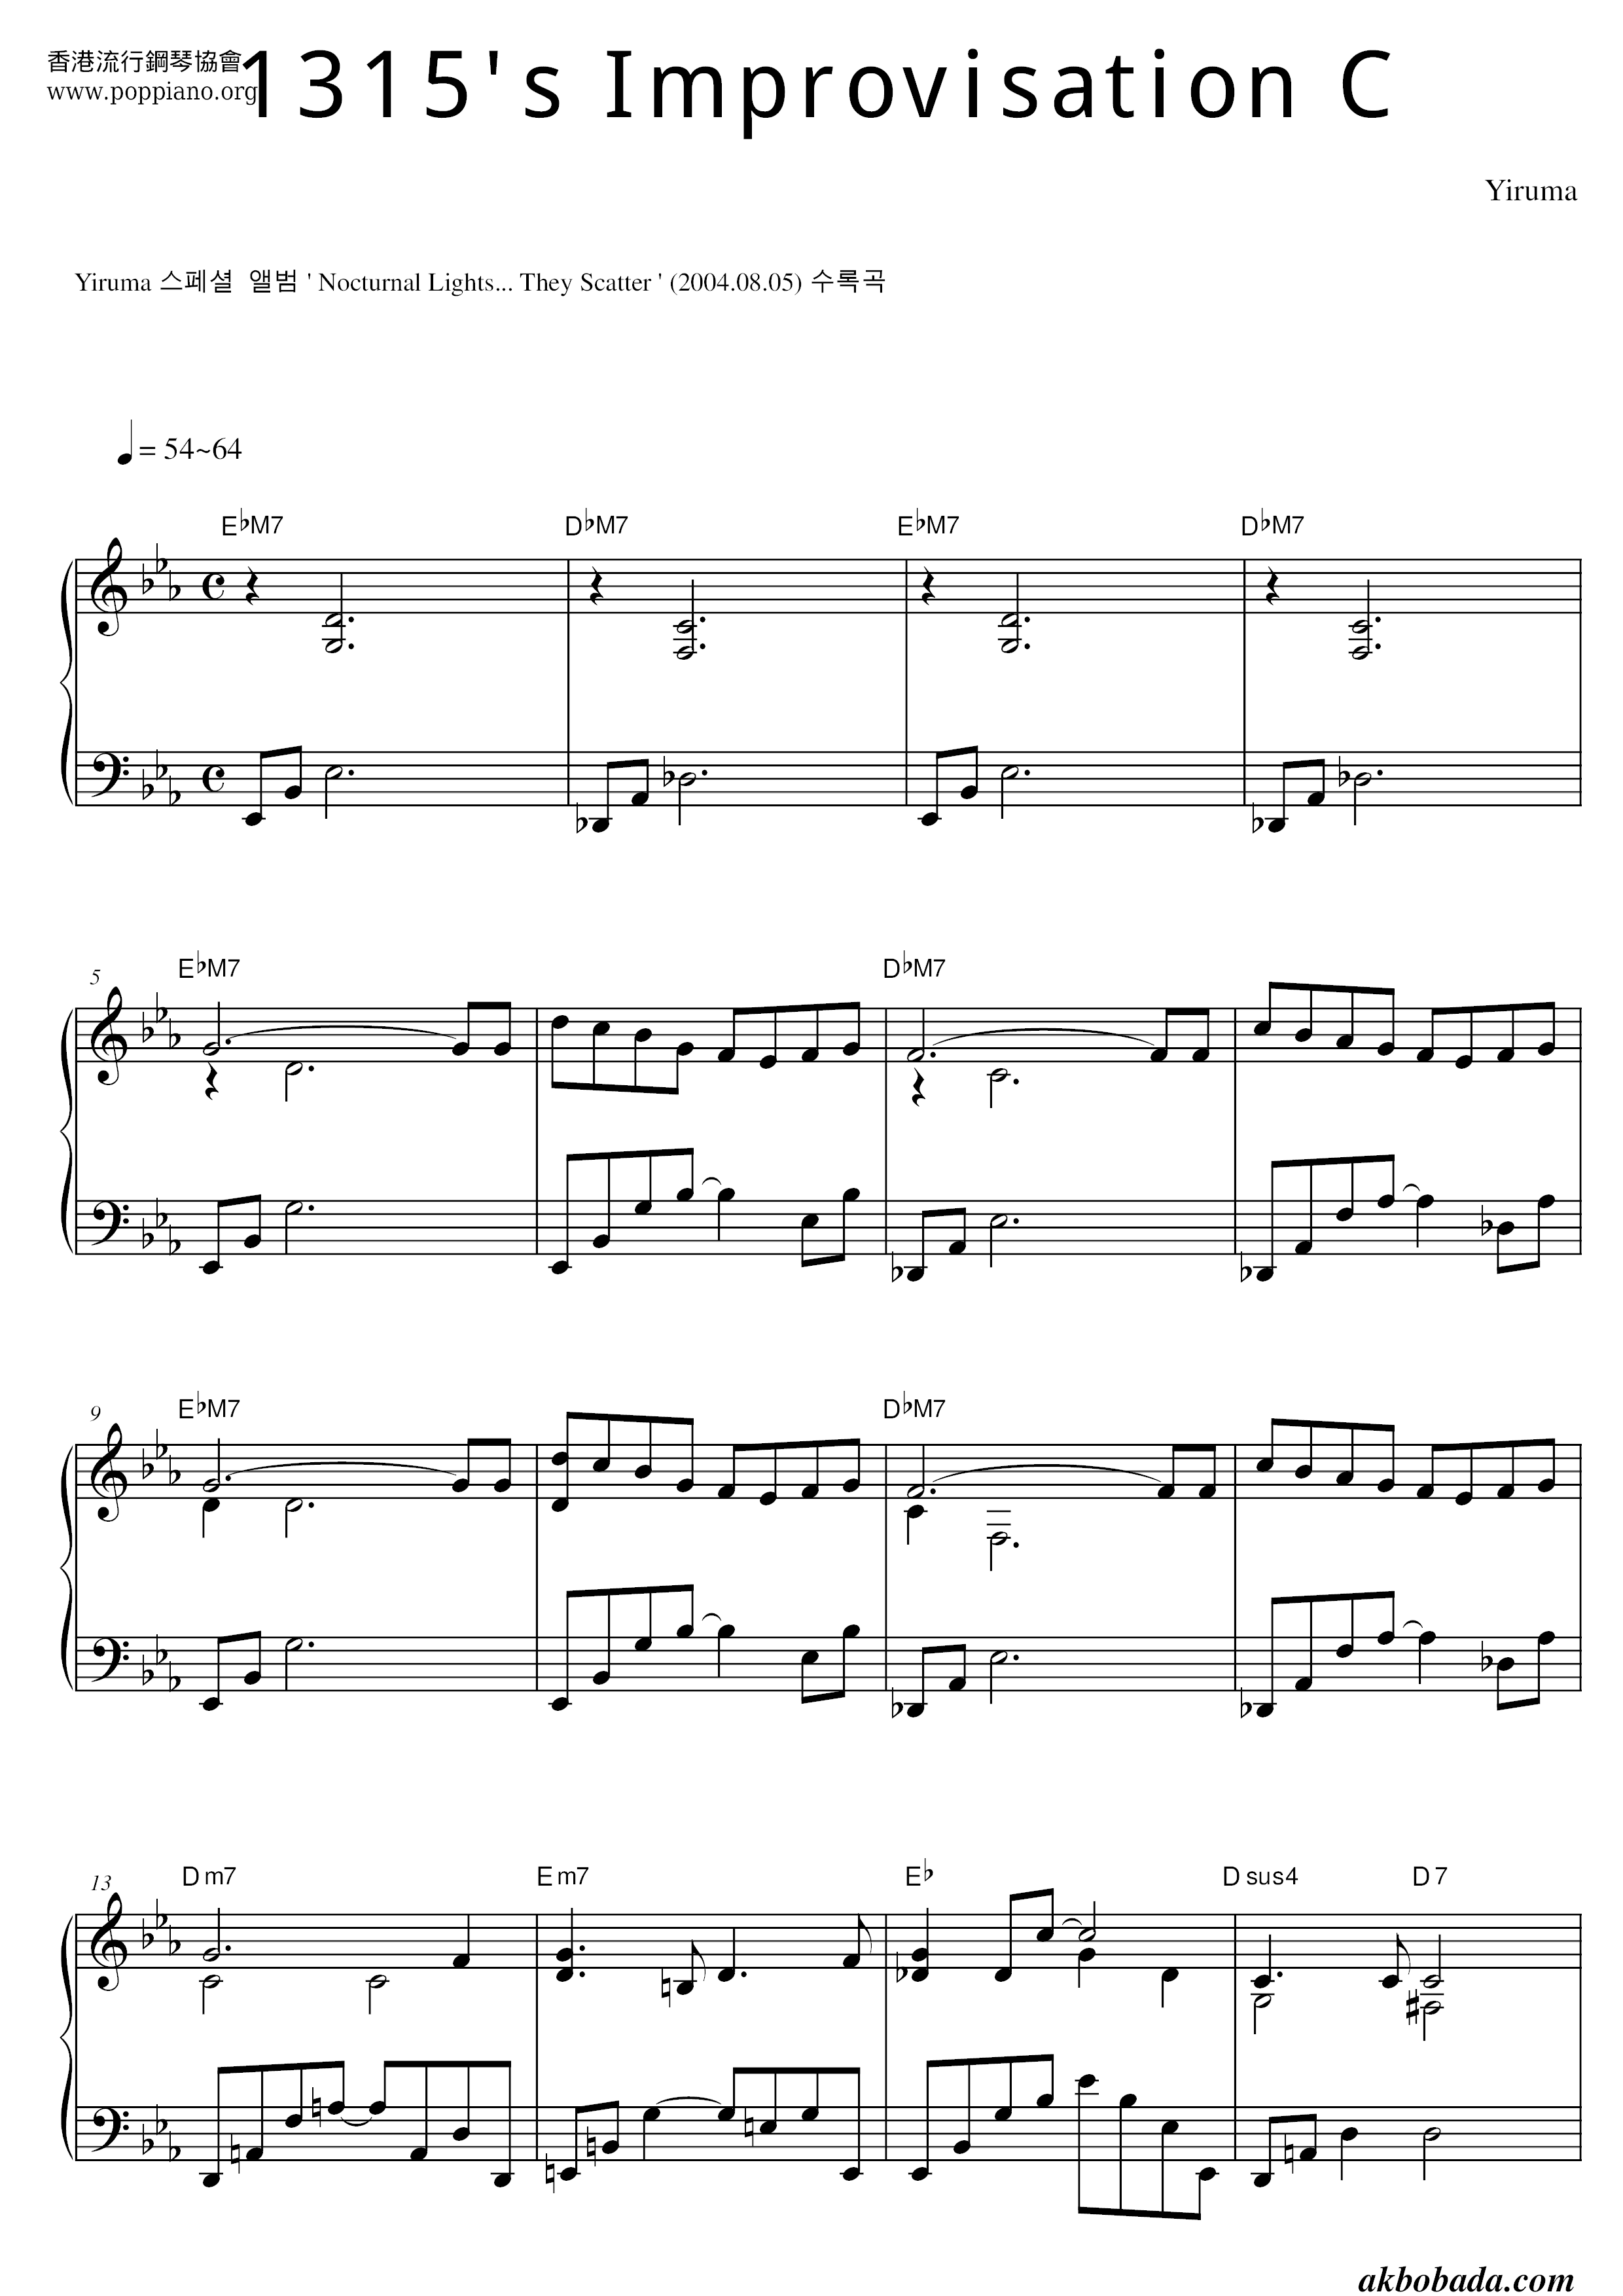 1315's Improvisation C琴譜